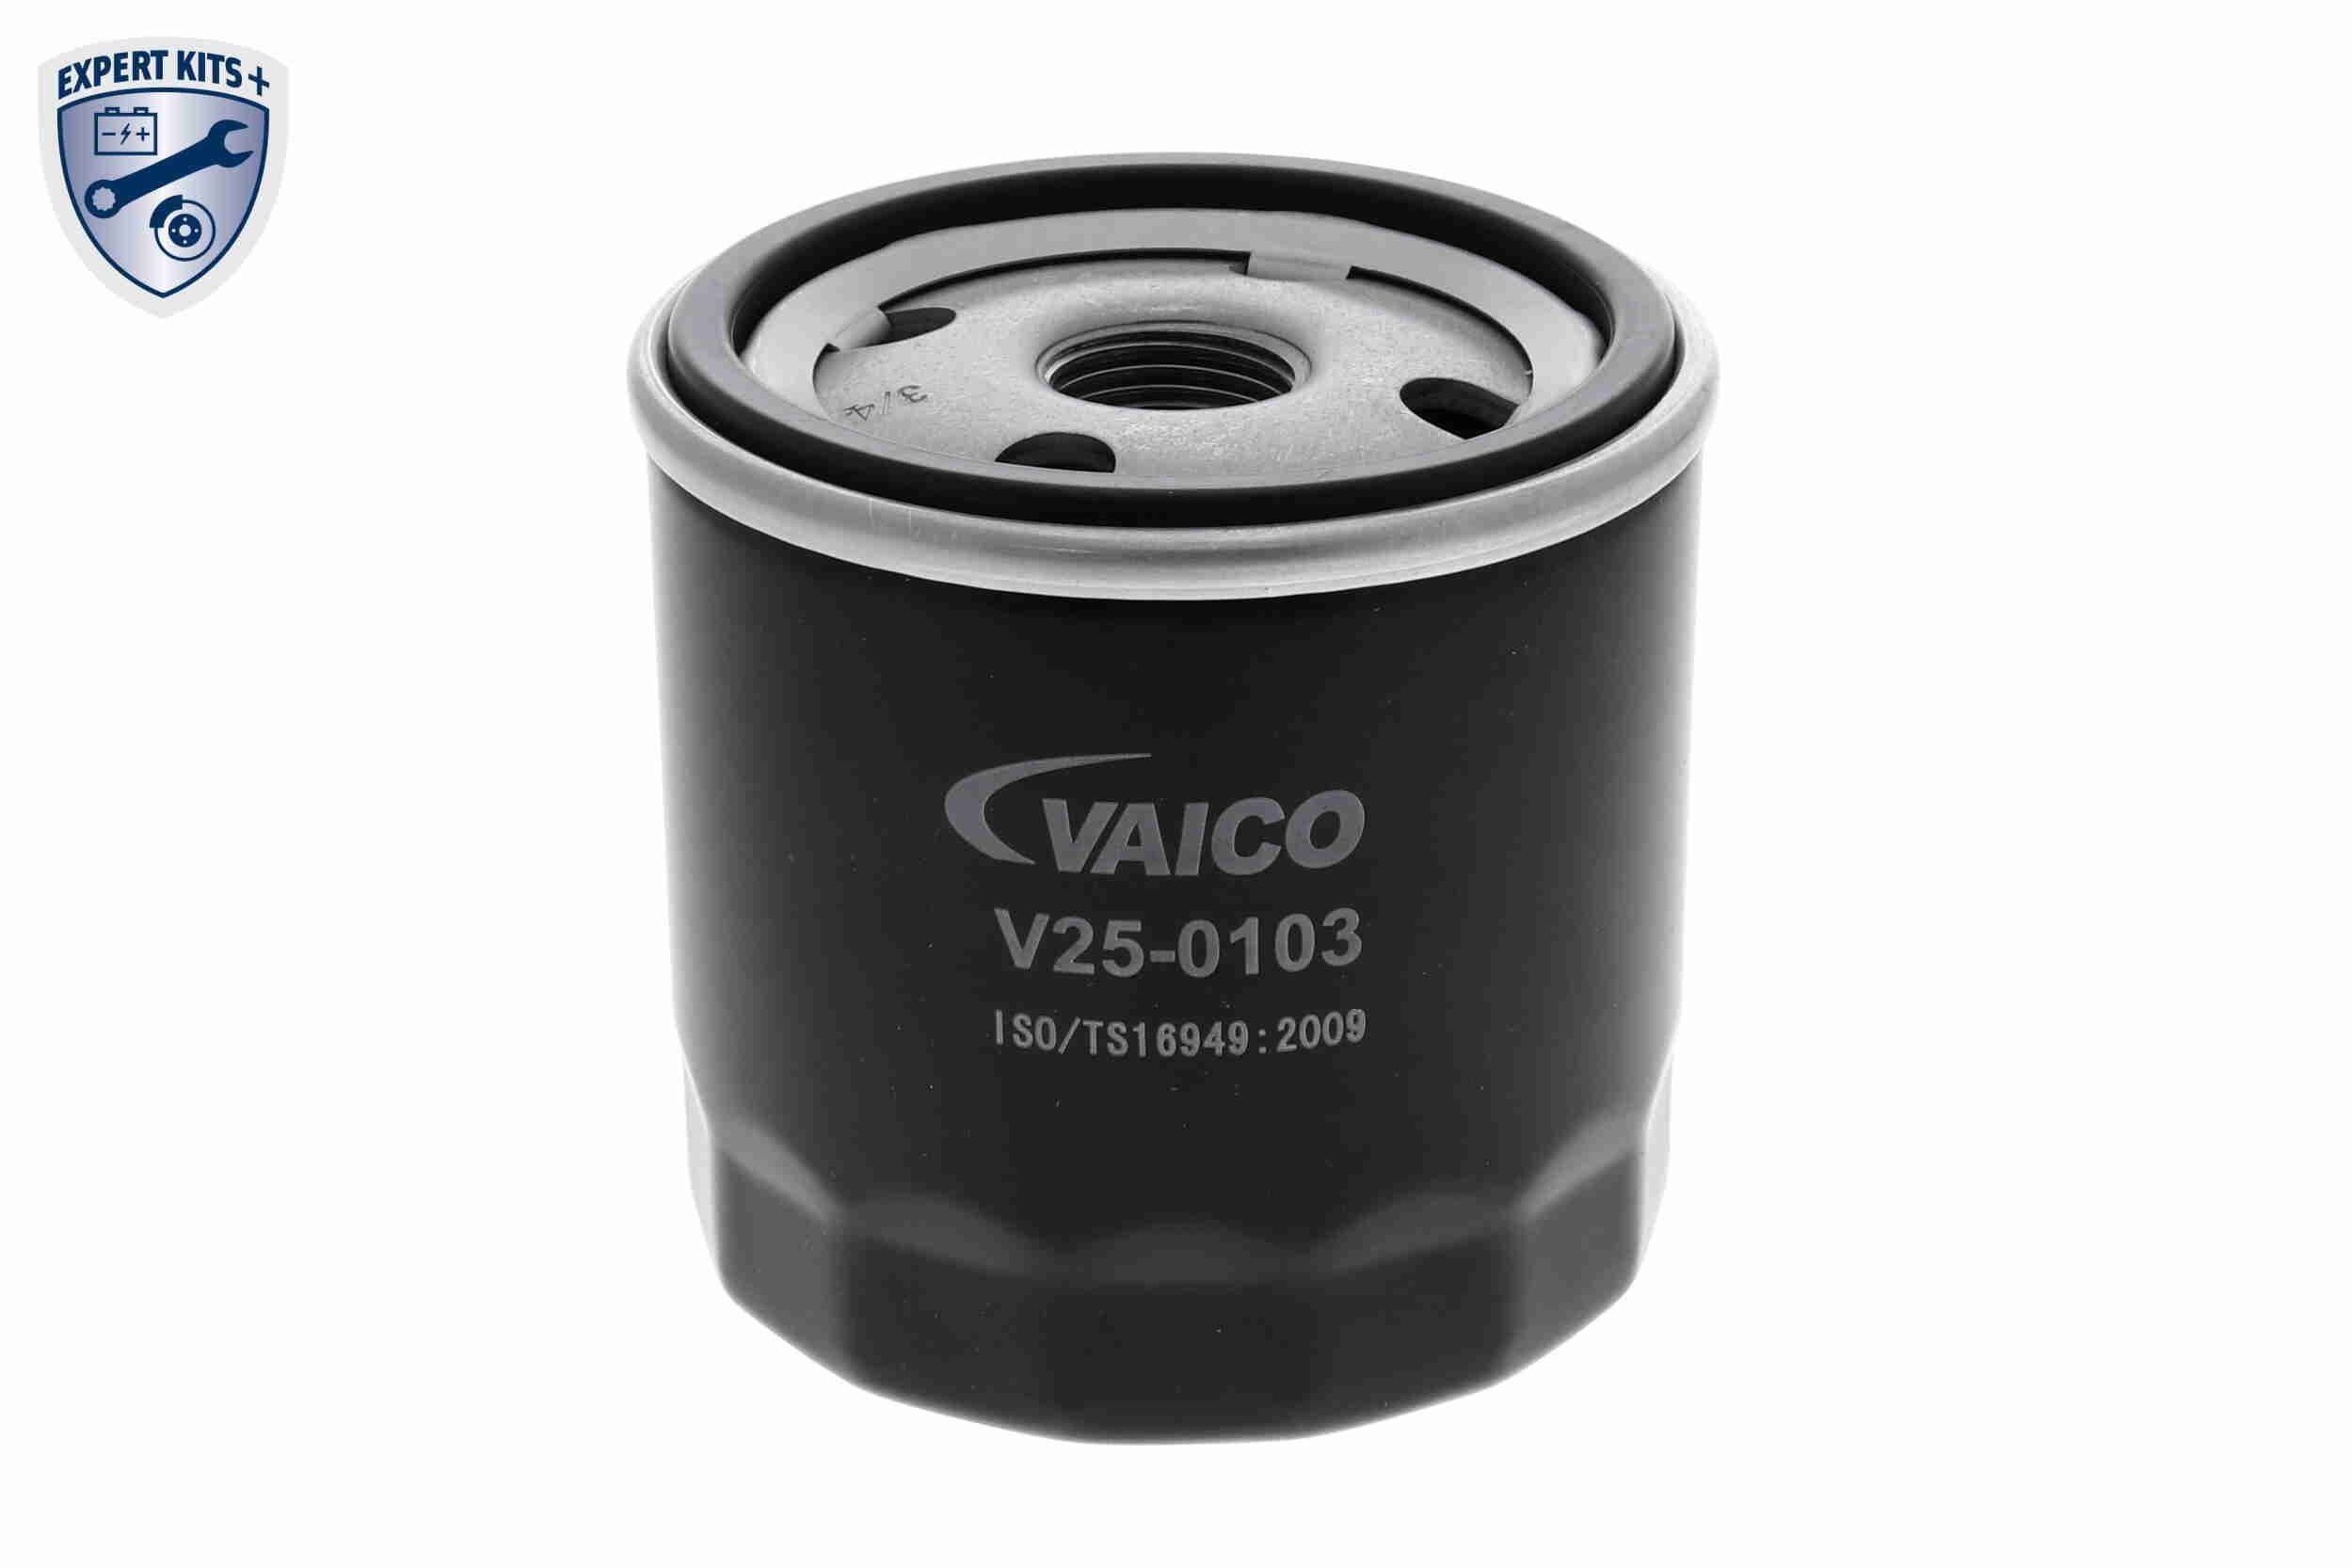 VAICO V25-0103 Filtro olio 3/4-16 UNF, Qualità de VAICO originale, con una valvola blocco arretramento, Filtro ad avvitamento